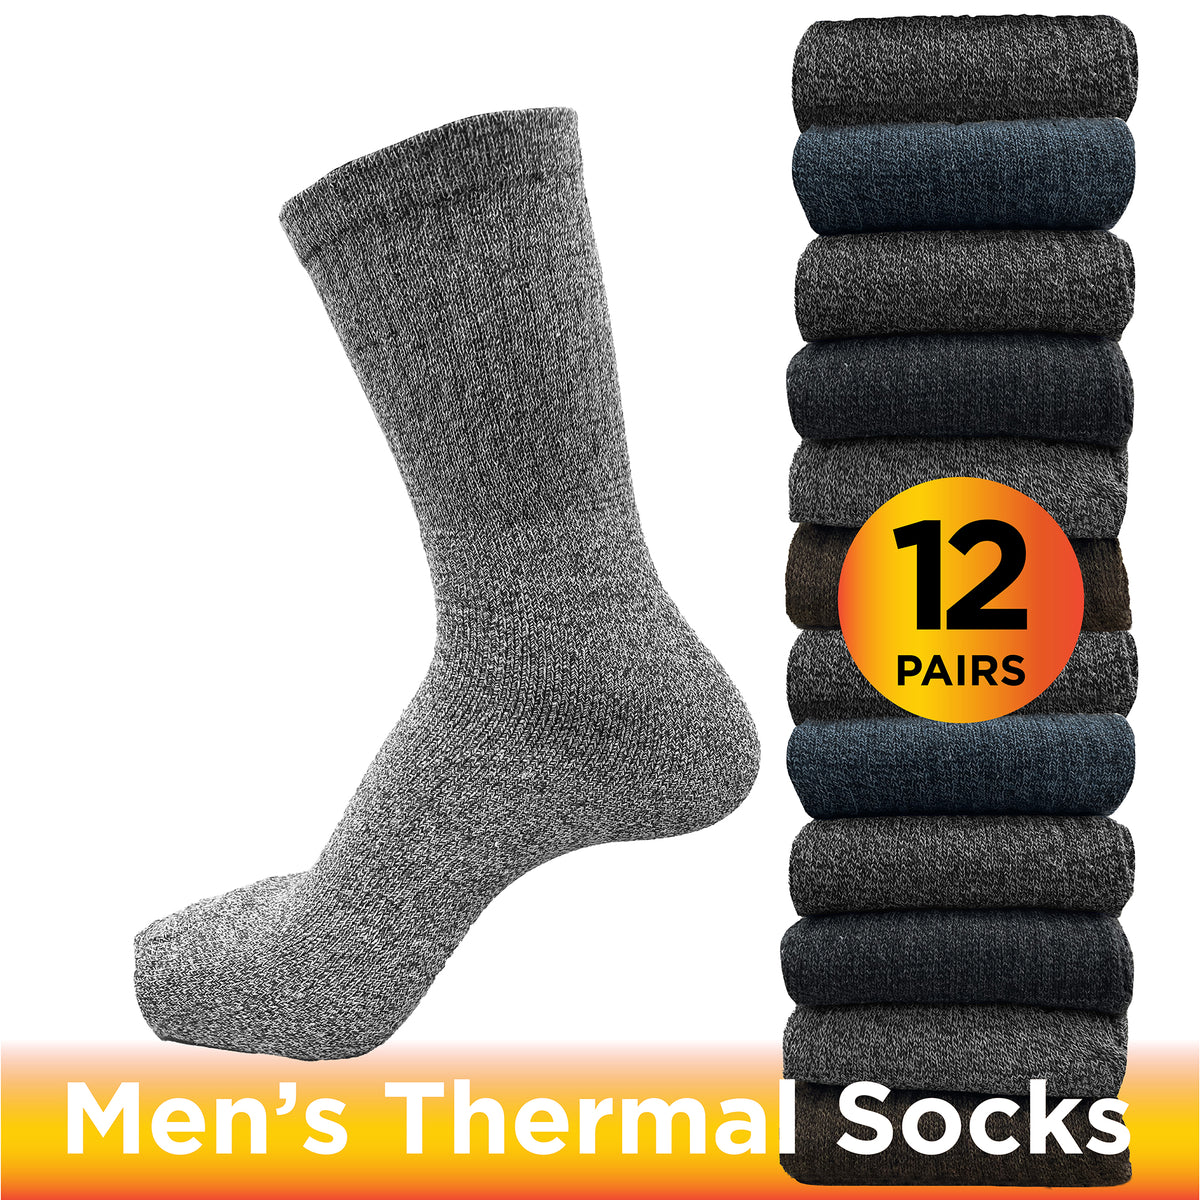 Mens 12 Pack Thermal Socks Assorted